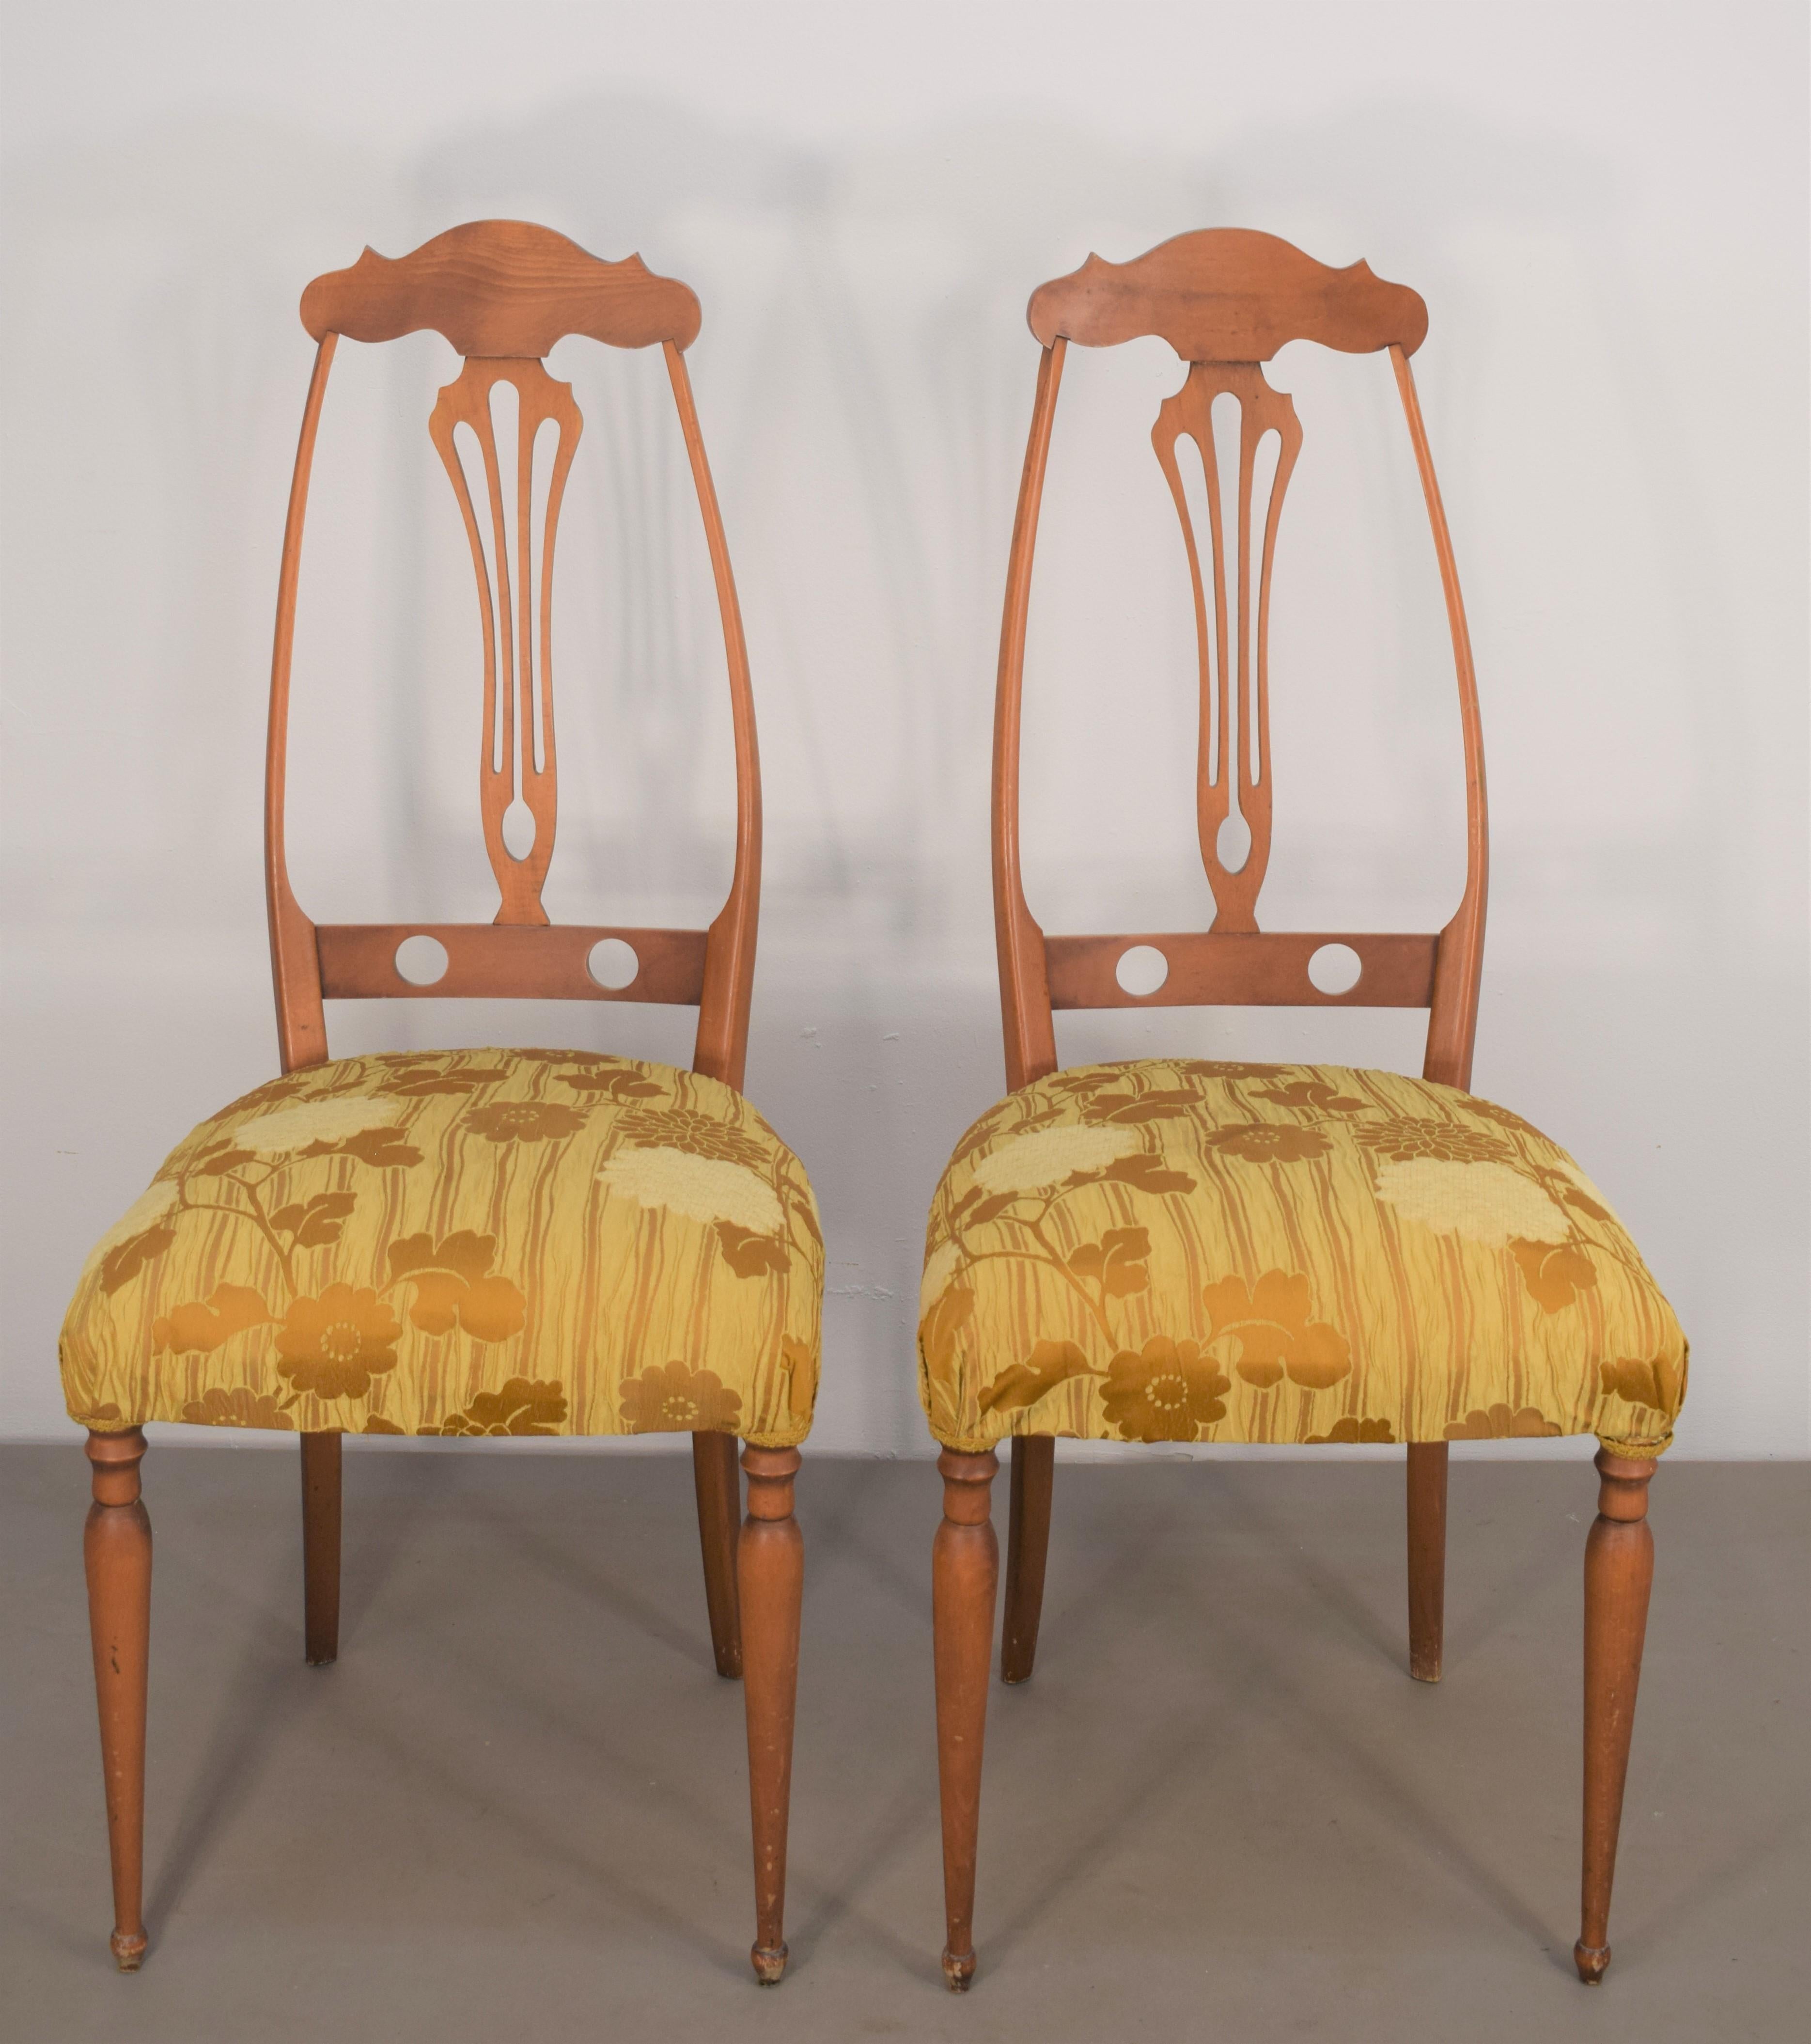 Pair of Italian chairs by Pozzi & Verga, 1950s.

Dimensions: H= 101 cm; W= 44 cm; D=42 cm; H seat= 48 cm.